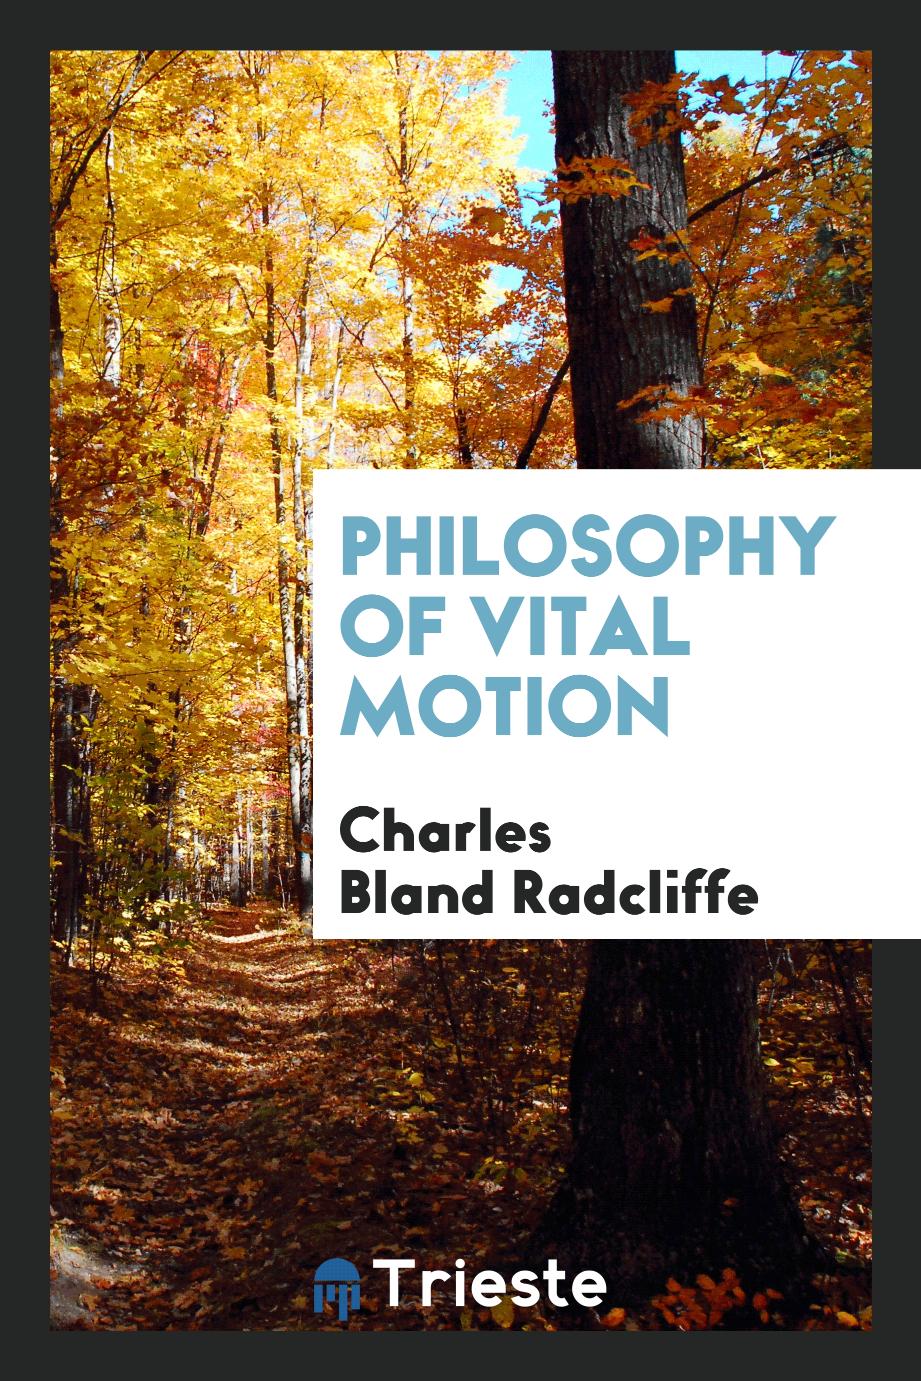 Philosophy of vital motion